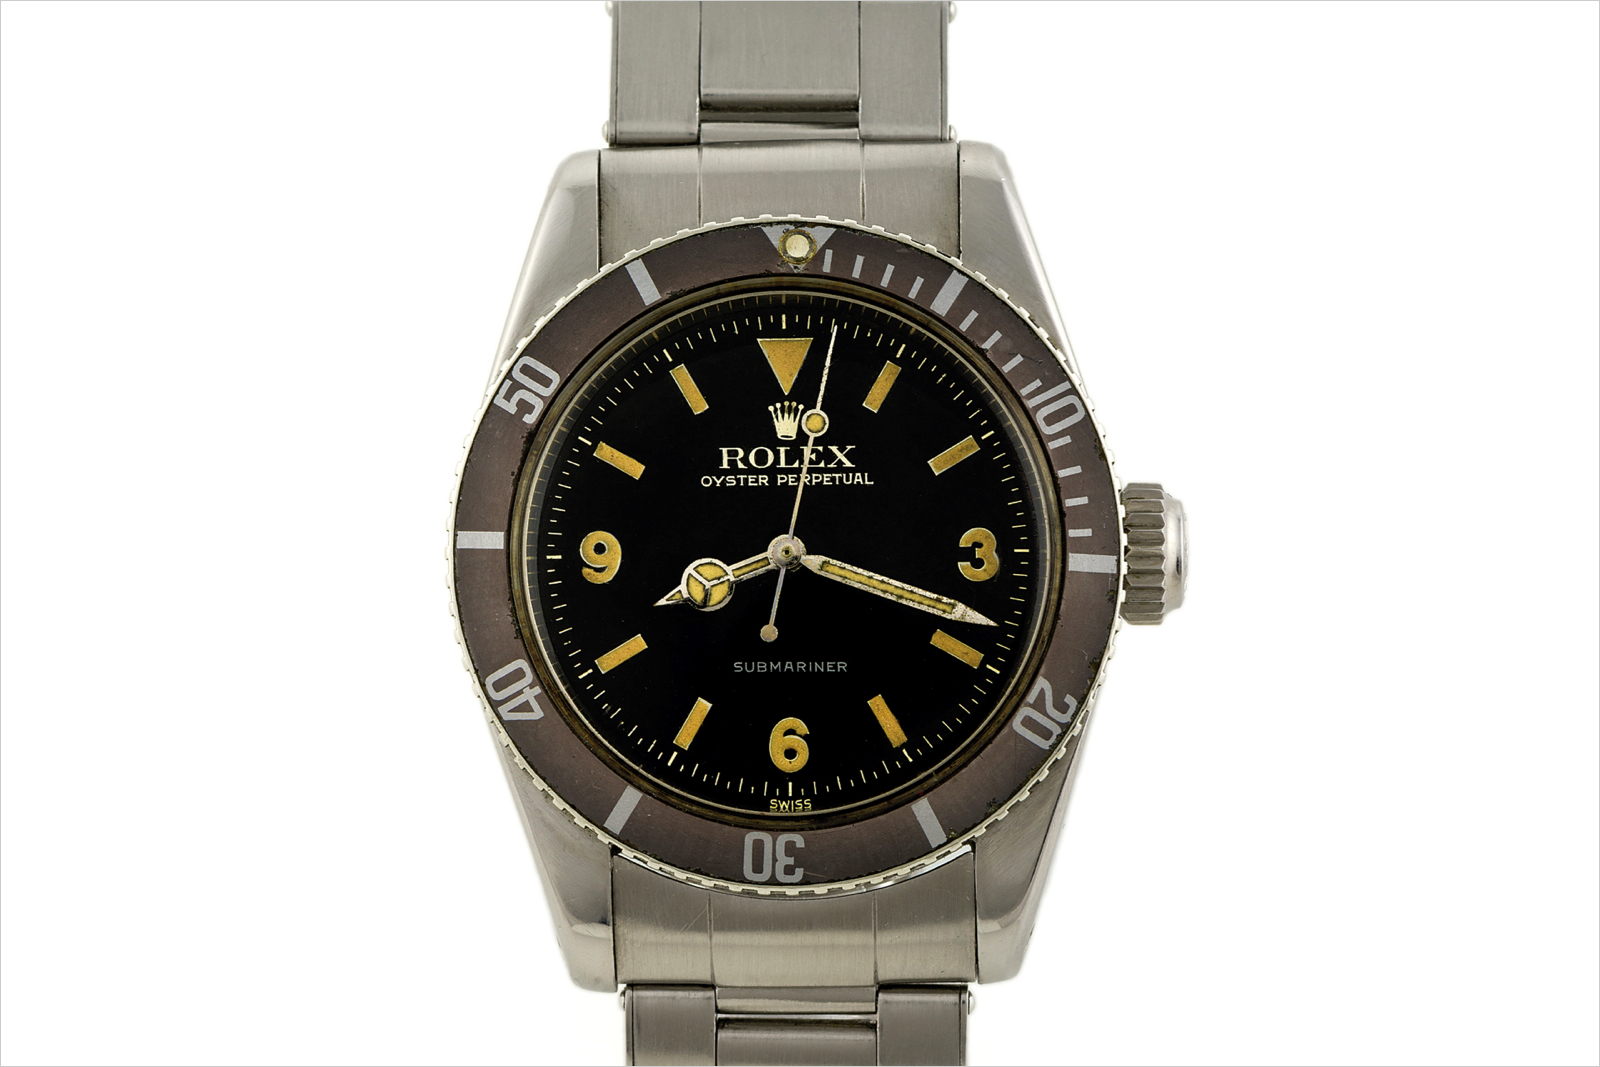 Rolex Submariner Ref. 6200 sells for 